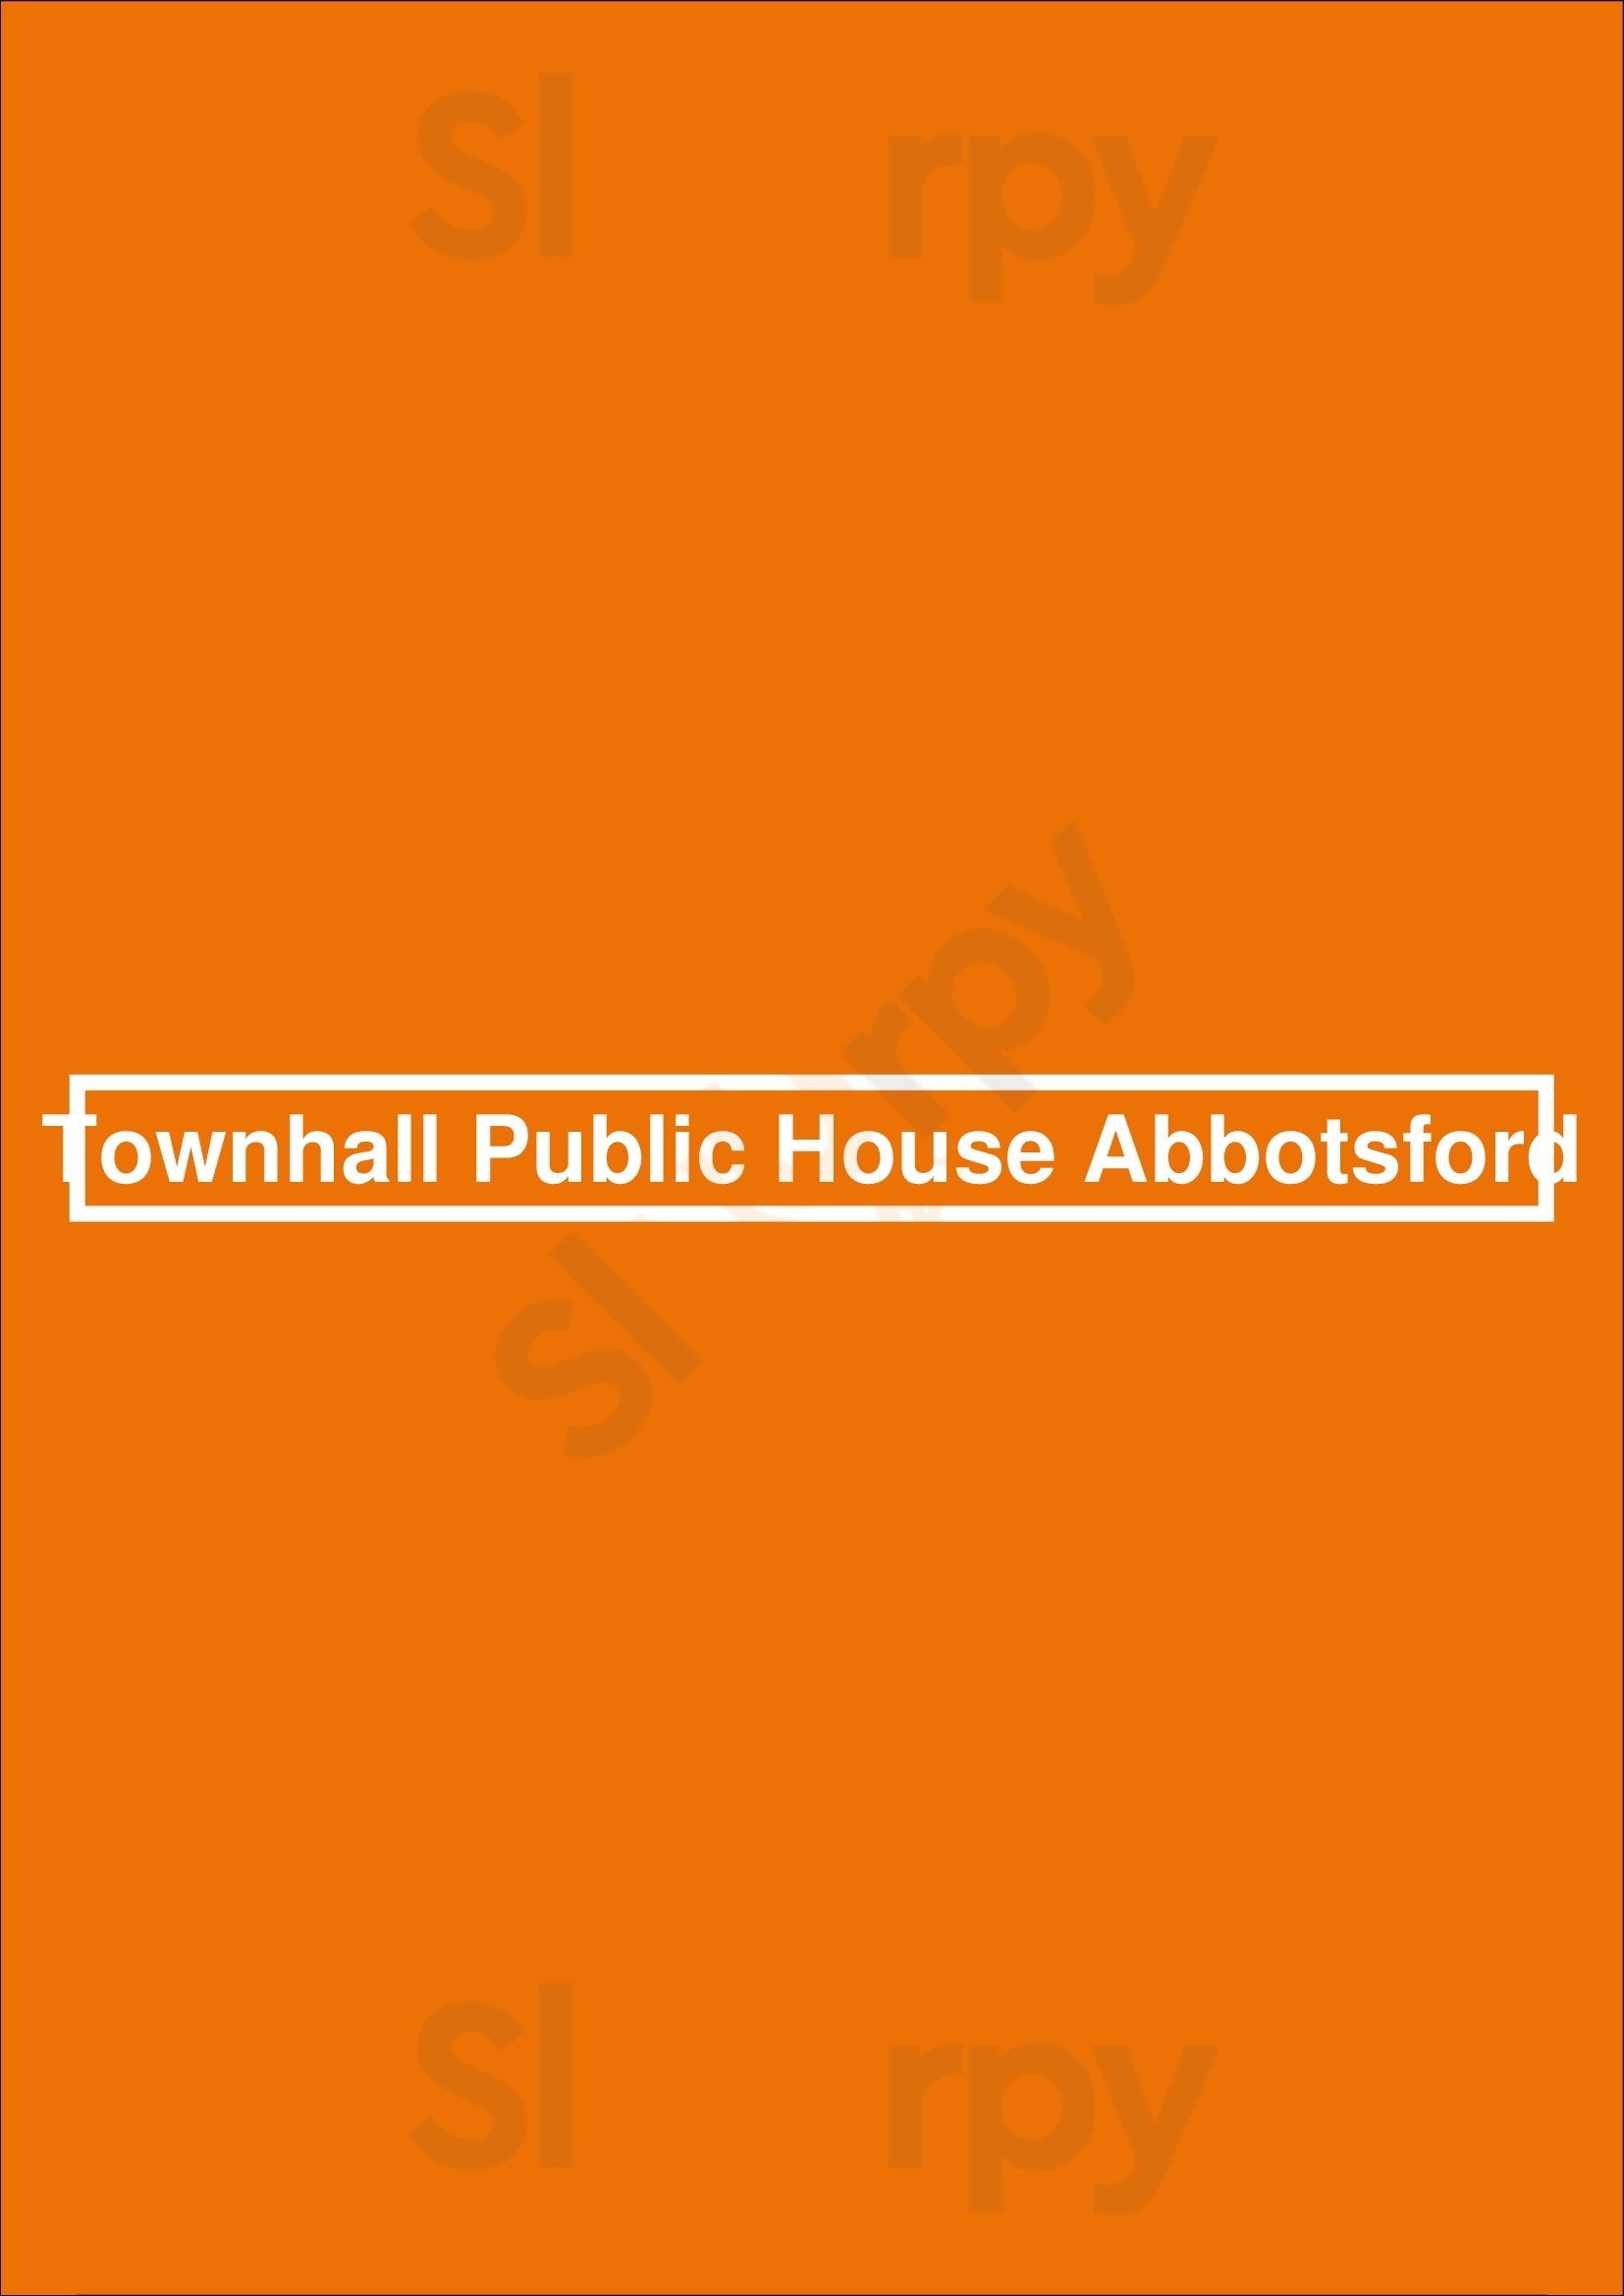 Townhall Abbotsford Abbotsford Menu - 1